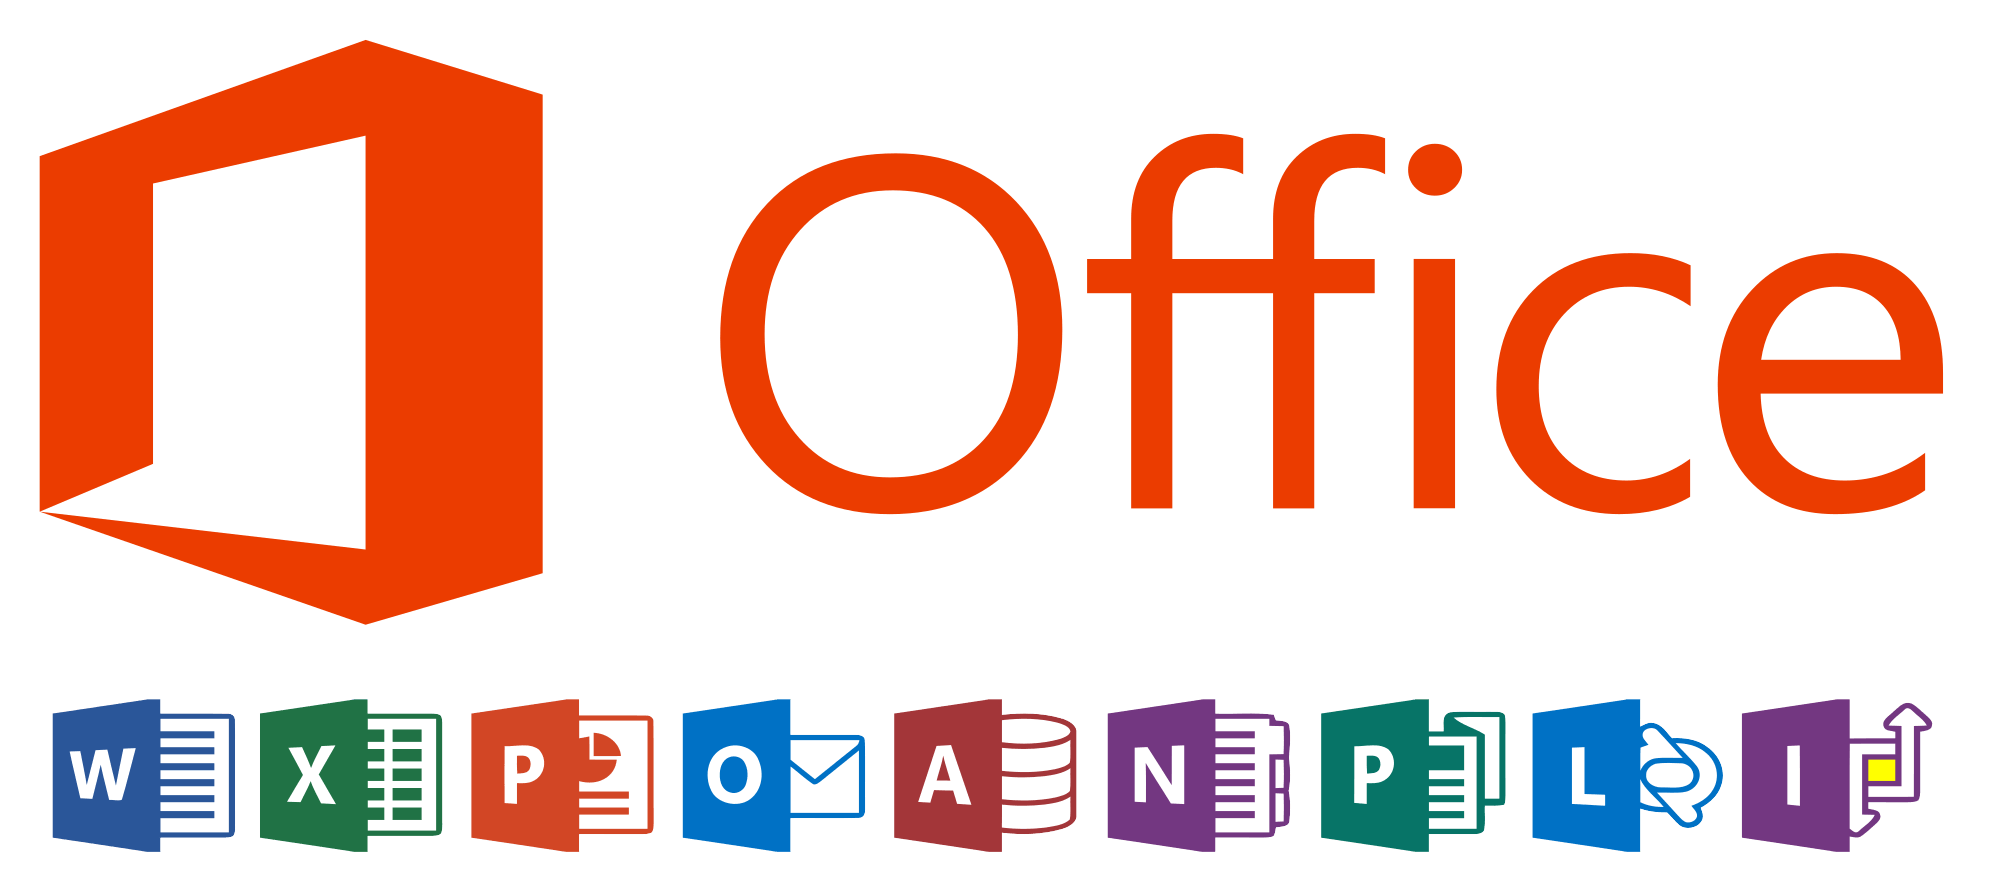 Microsoft Office New Logo - File:2018 Microsoft Office logos.svg - Wikimedia Commons